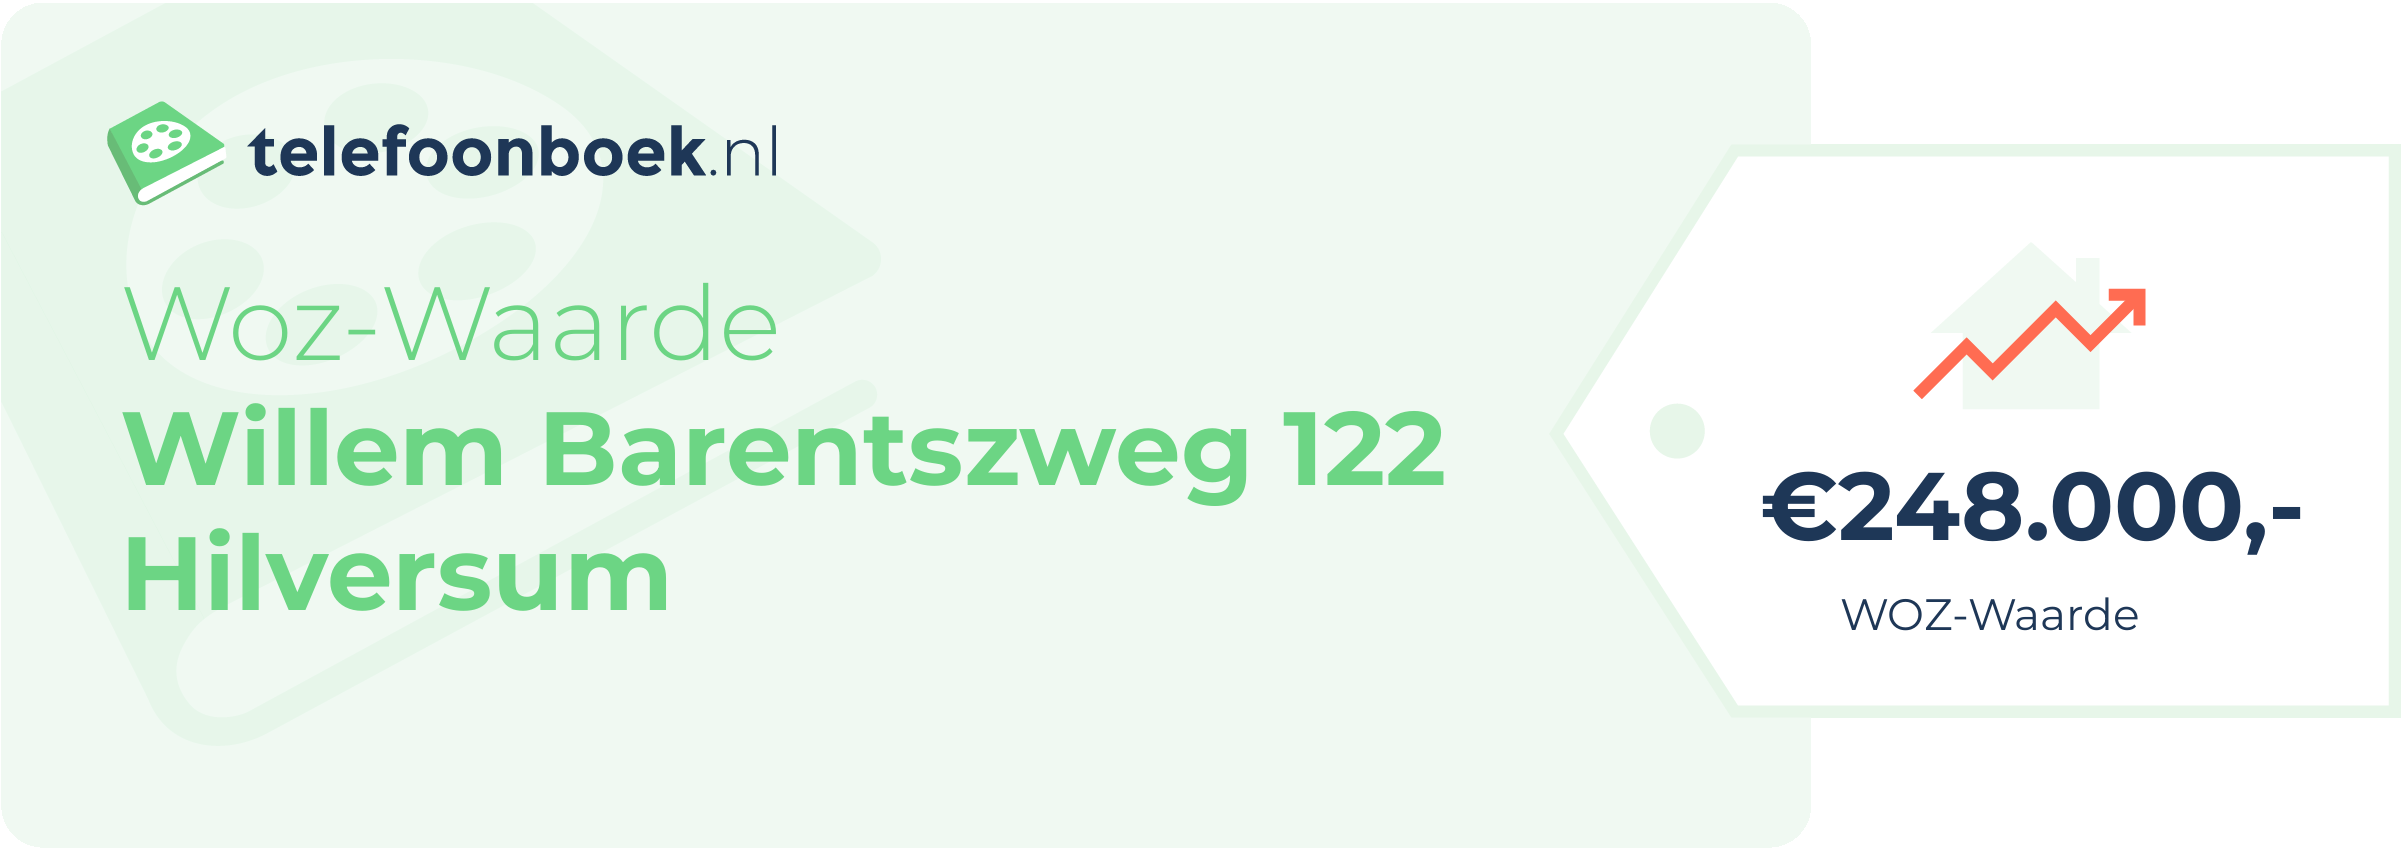 WOZ-waarde Willem Barentszweg 122 Hilversum